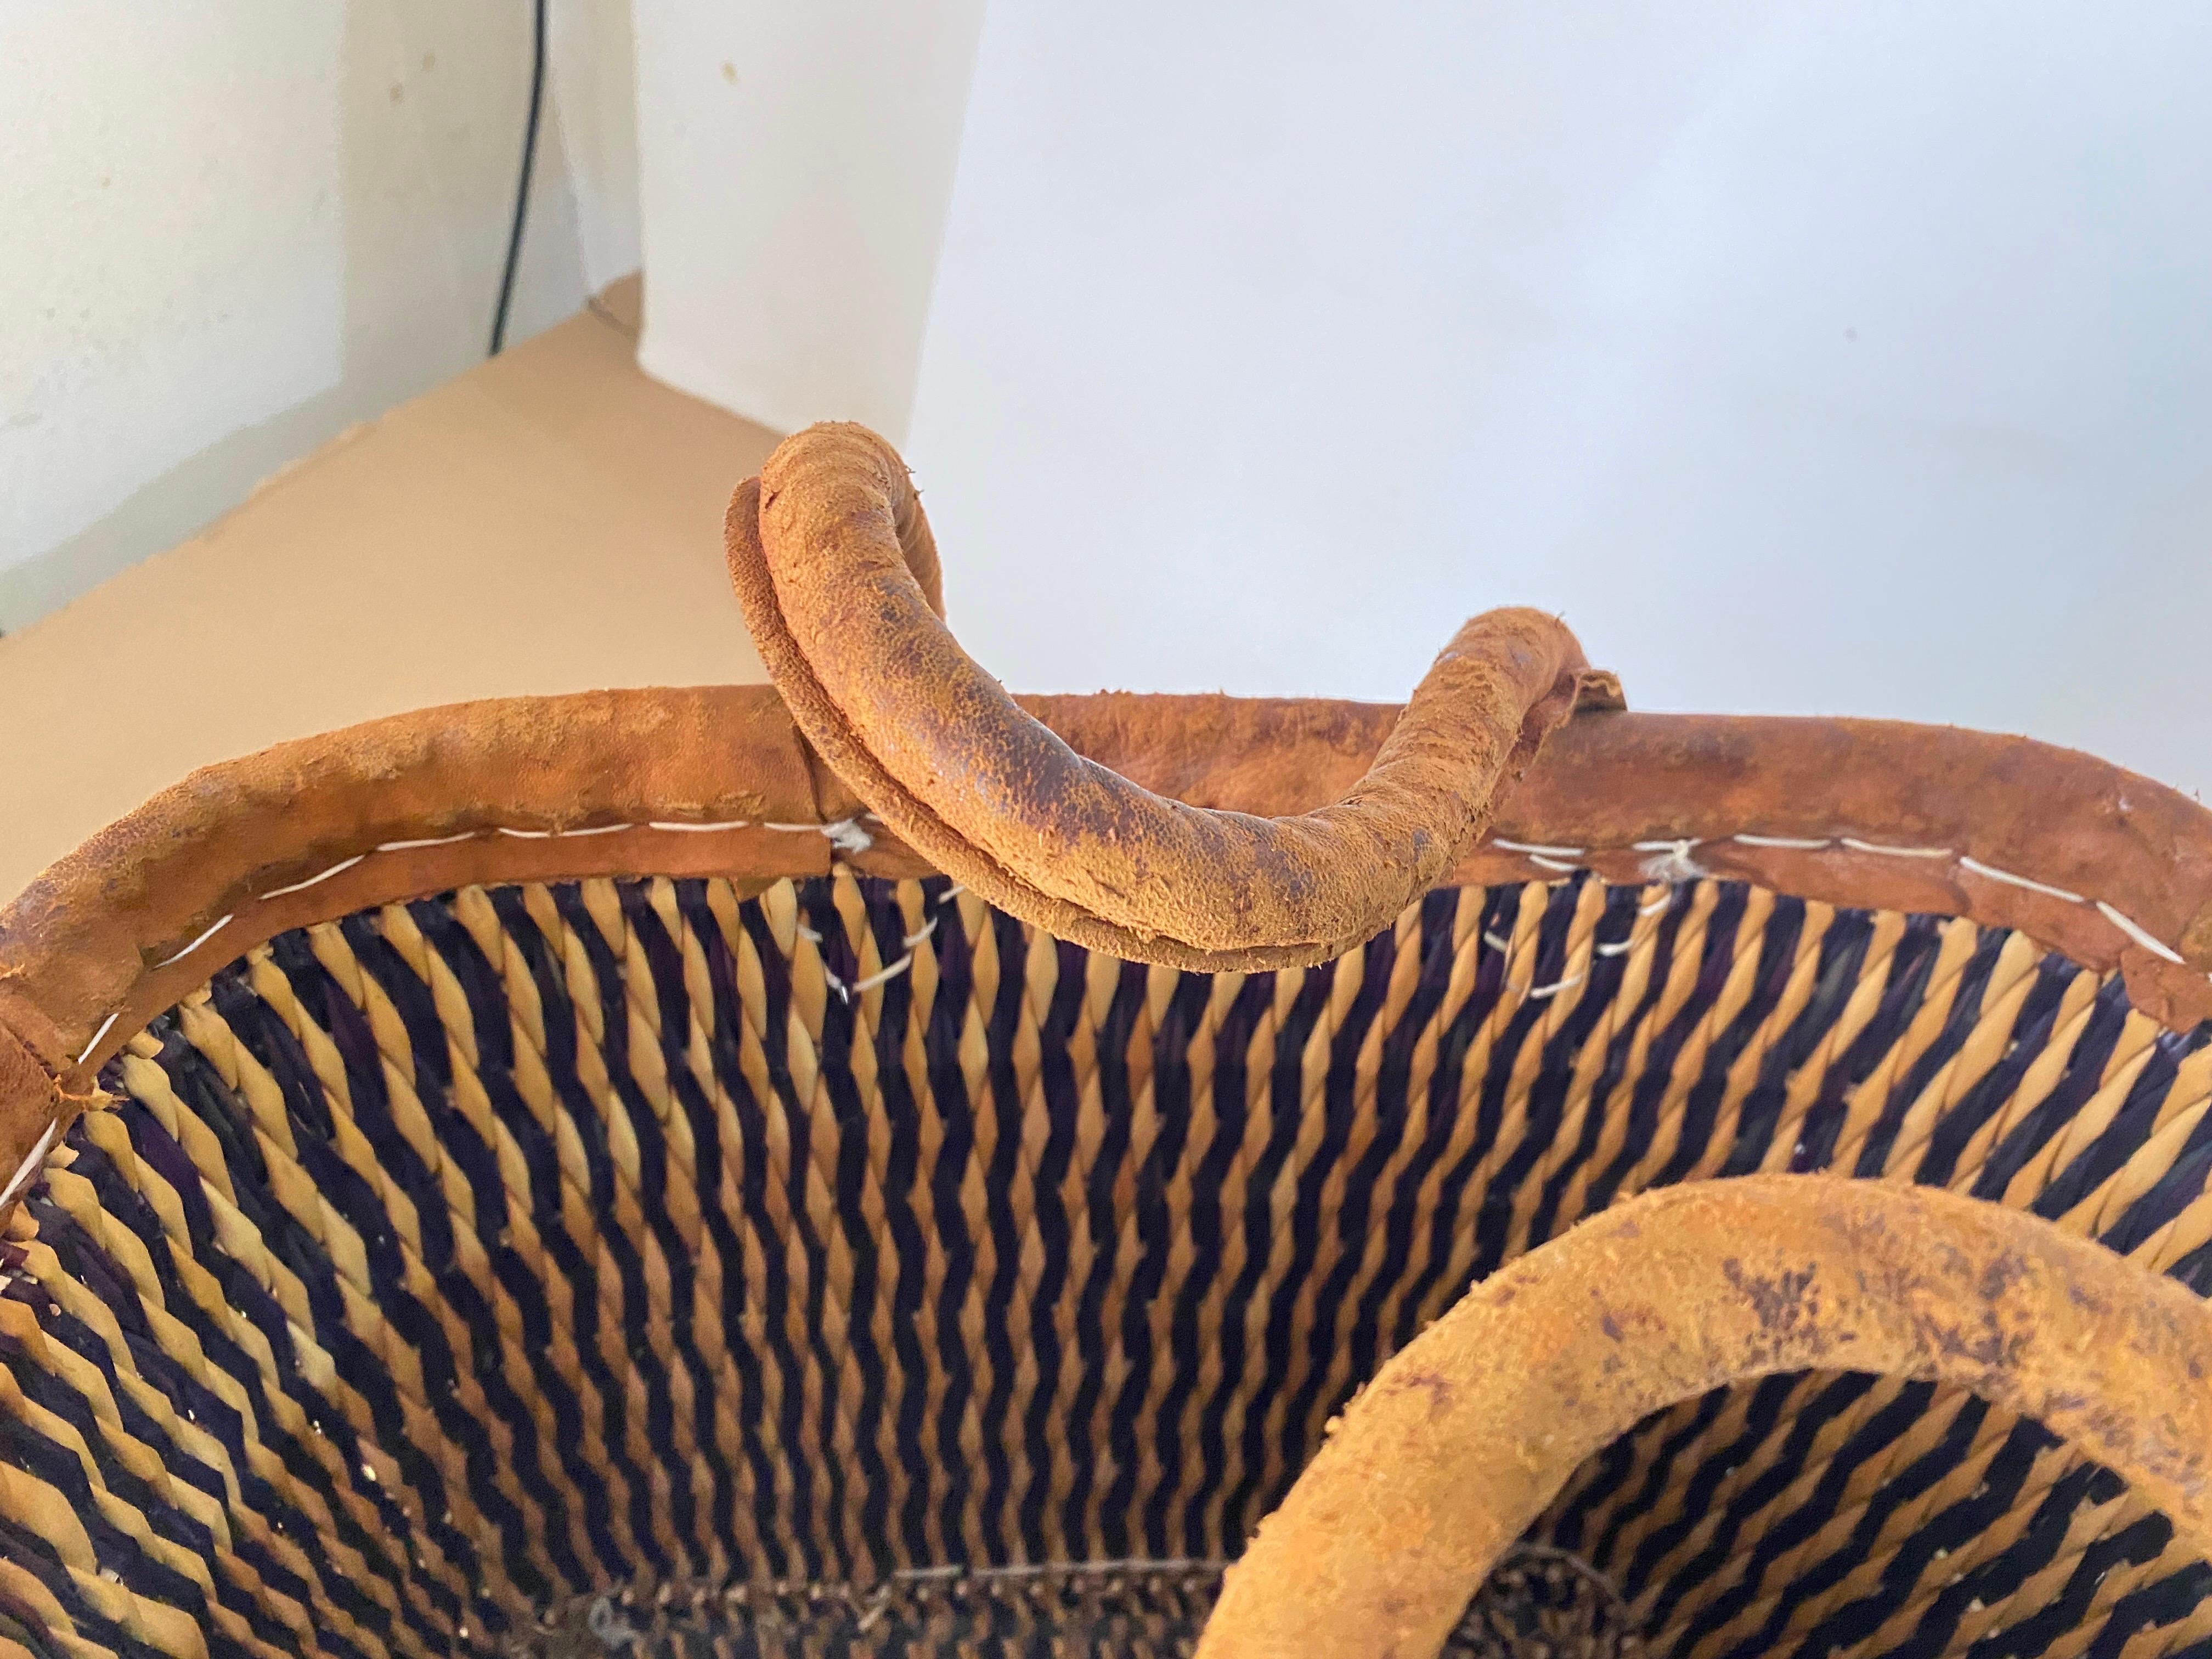 Vintage French Wicker Basket, Gold Color Stitched Leather Bag Handles France For Sale 6